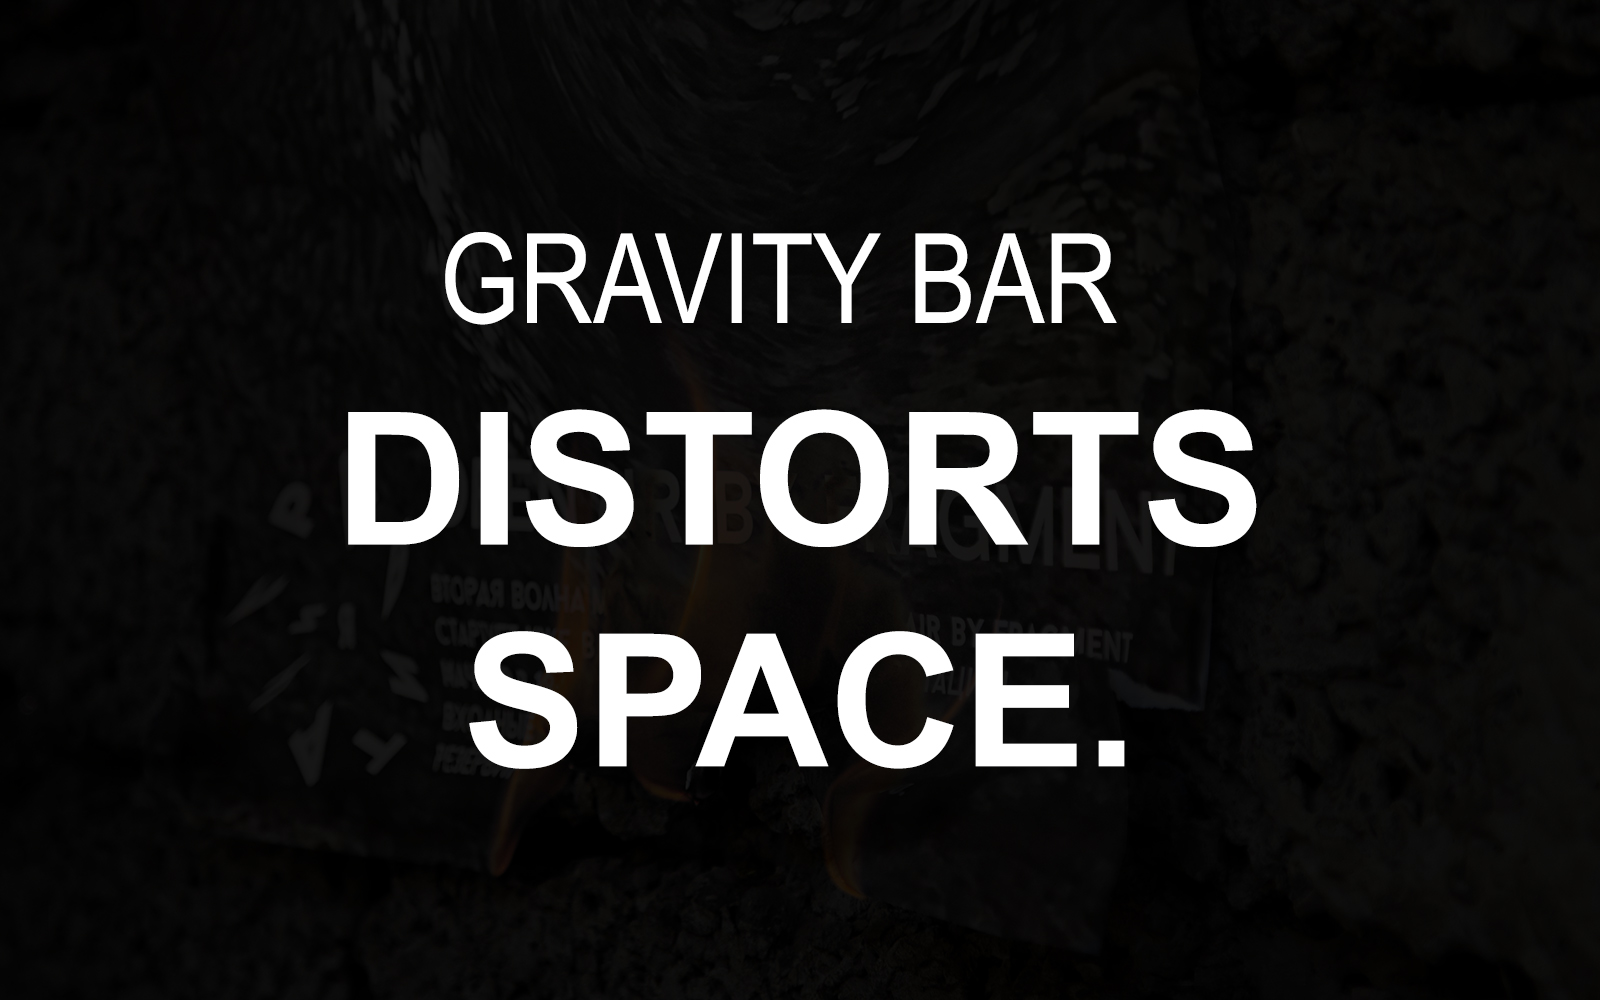 Gravity Bar distorts space